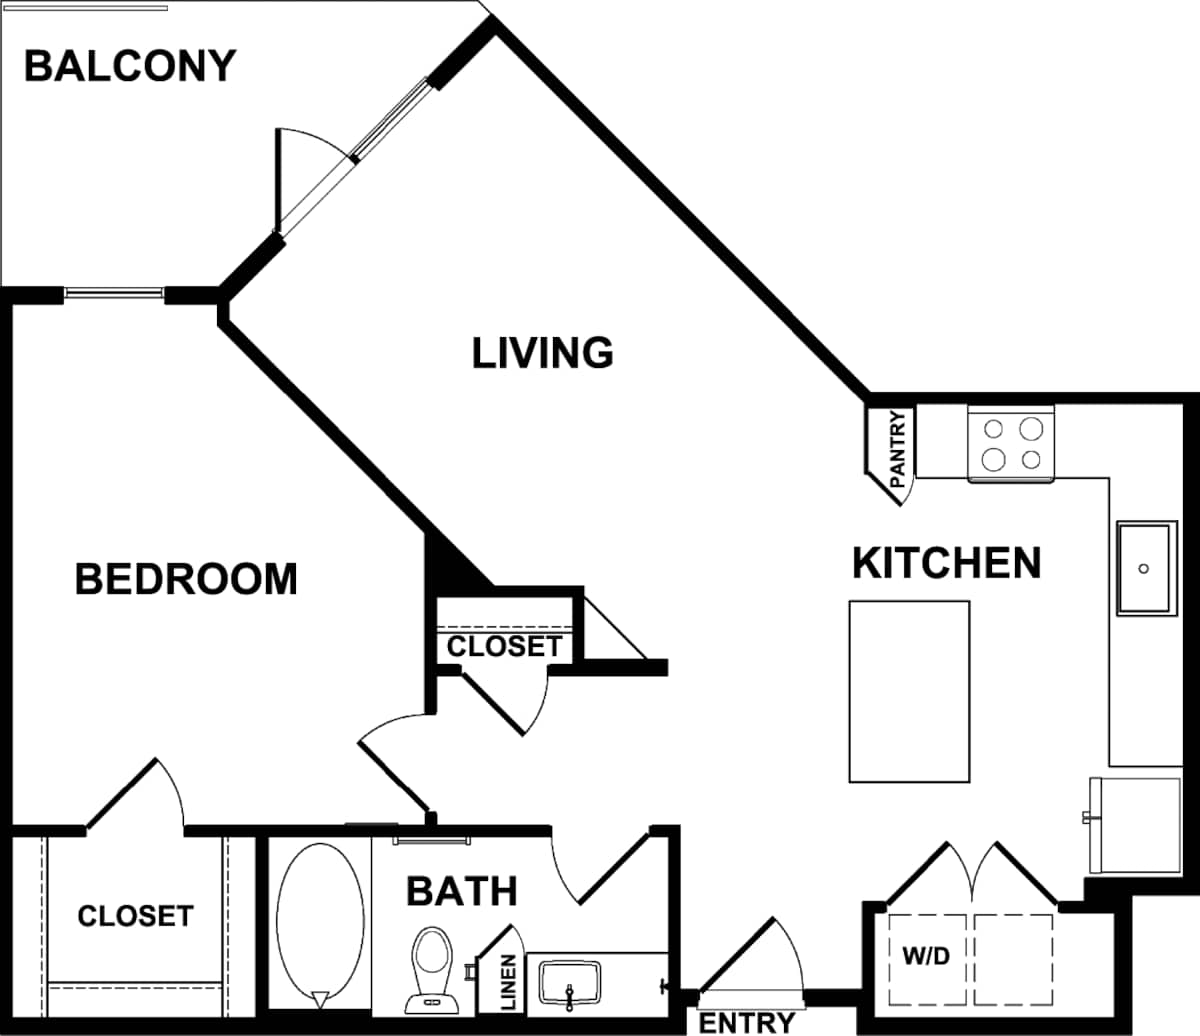 Floorplan diagram for A9, showing 1 bedroom